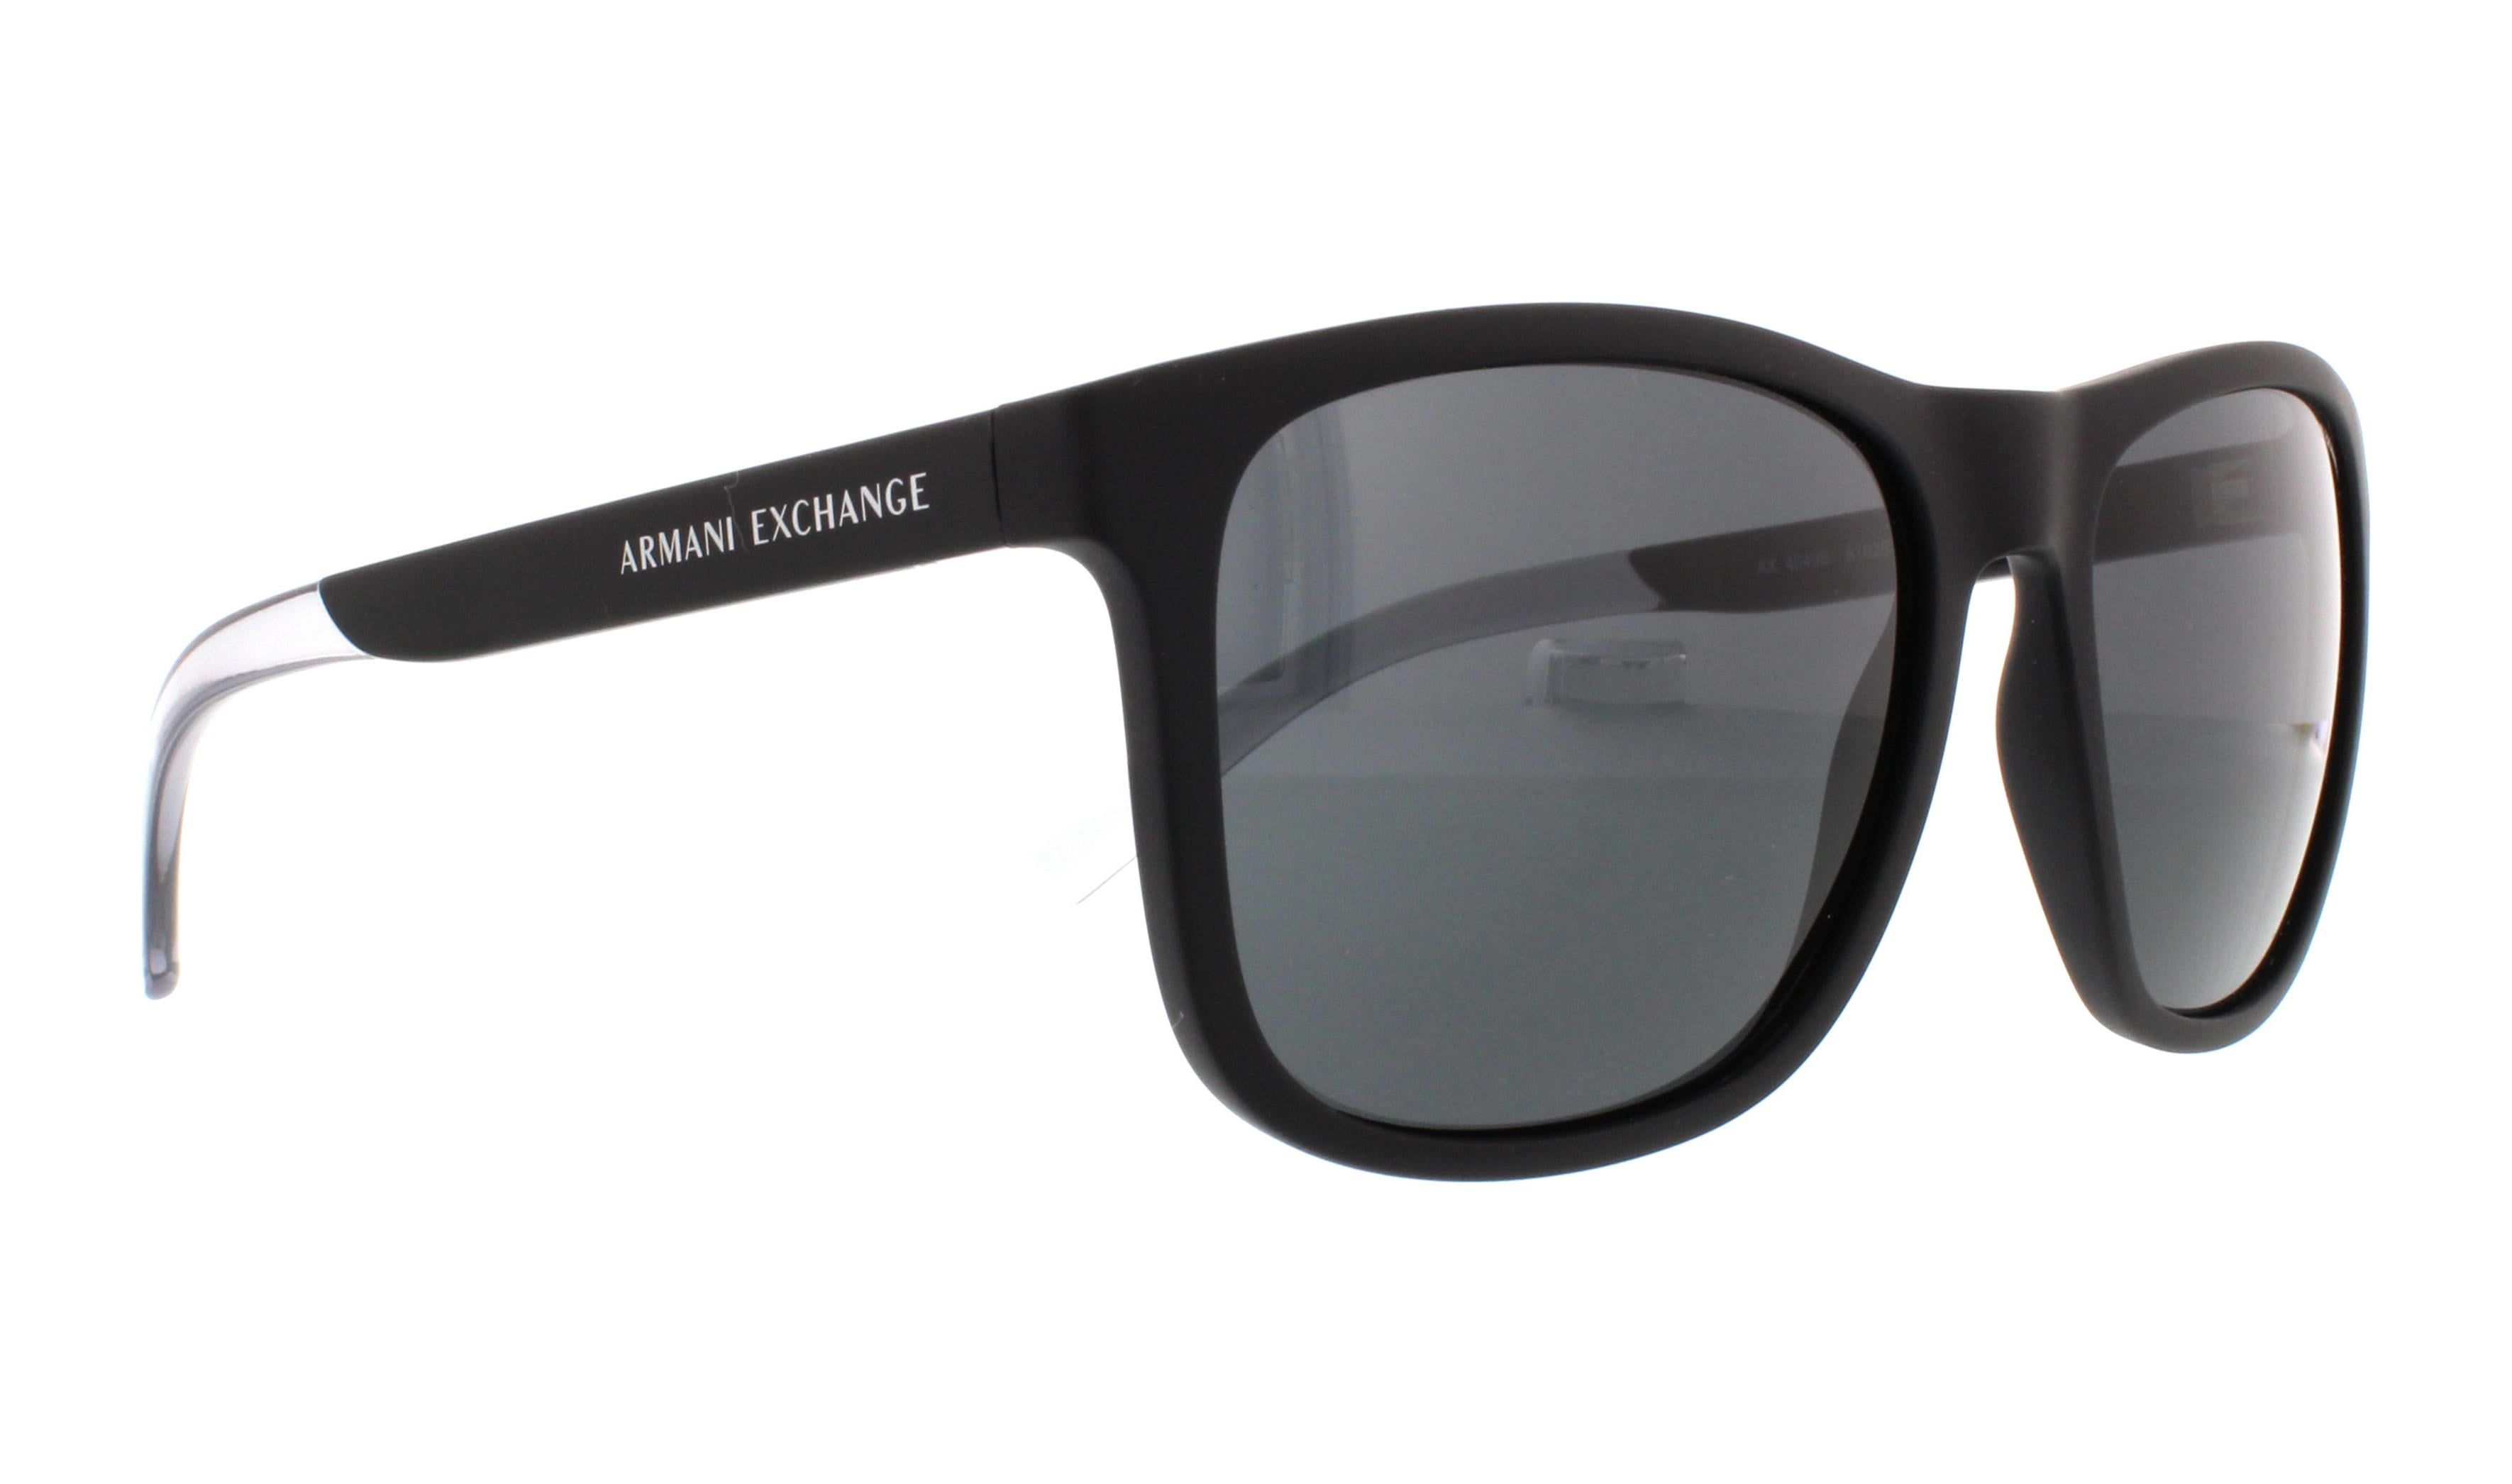 armani exchange black sunglasses